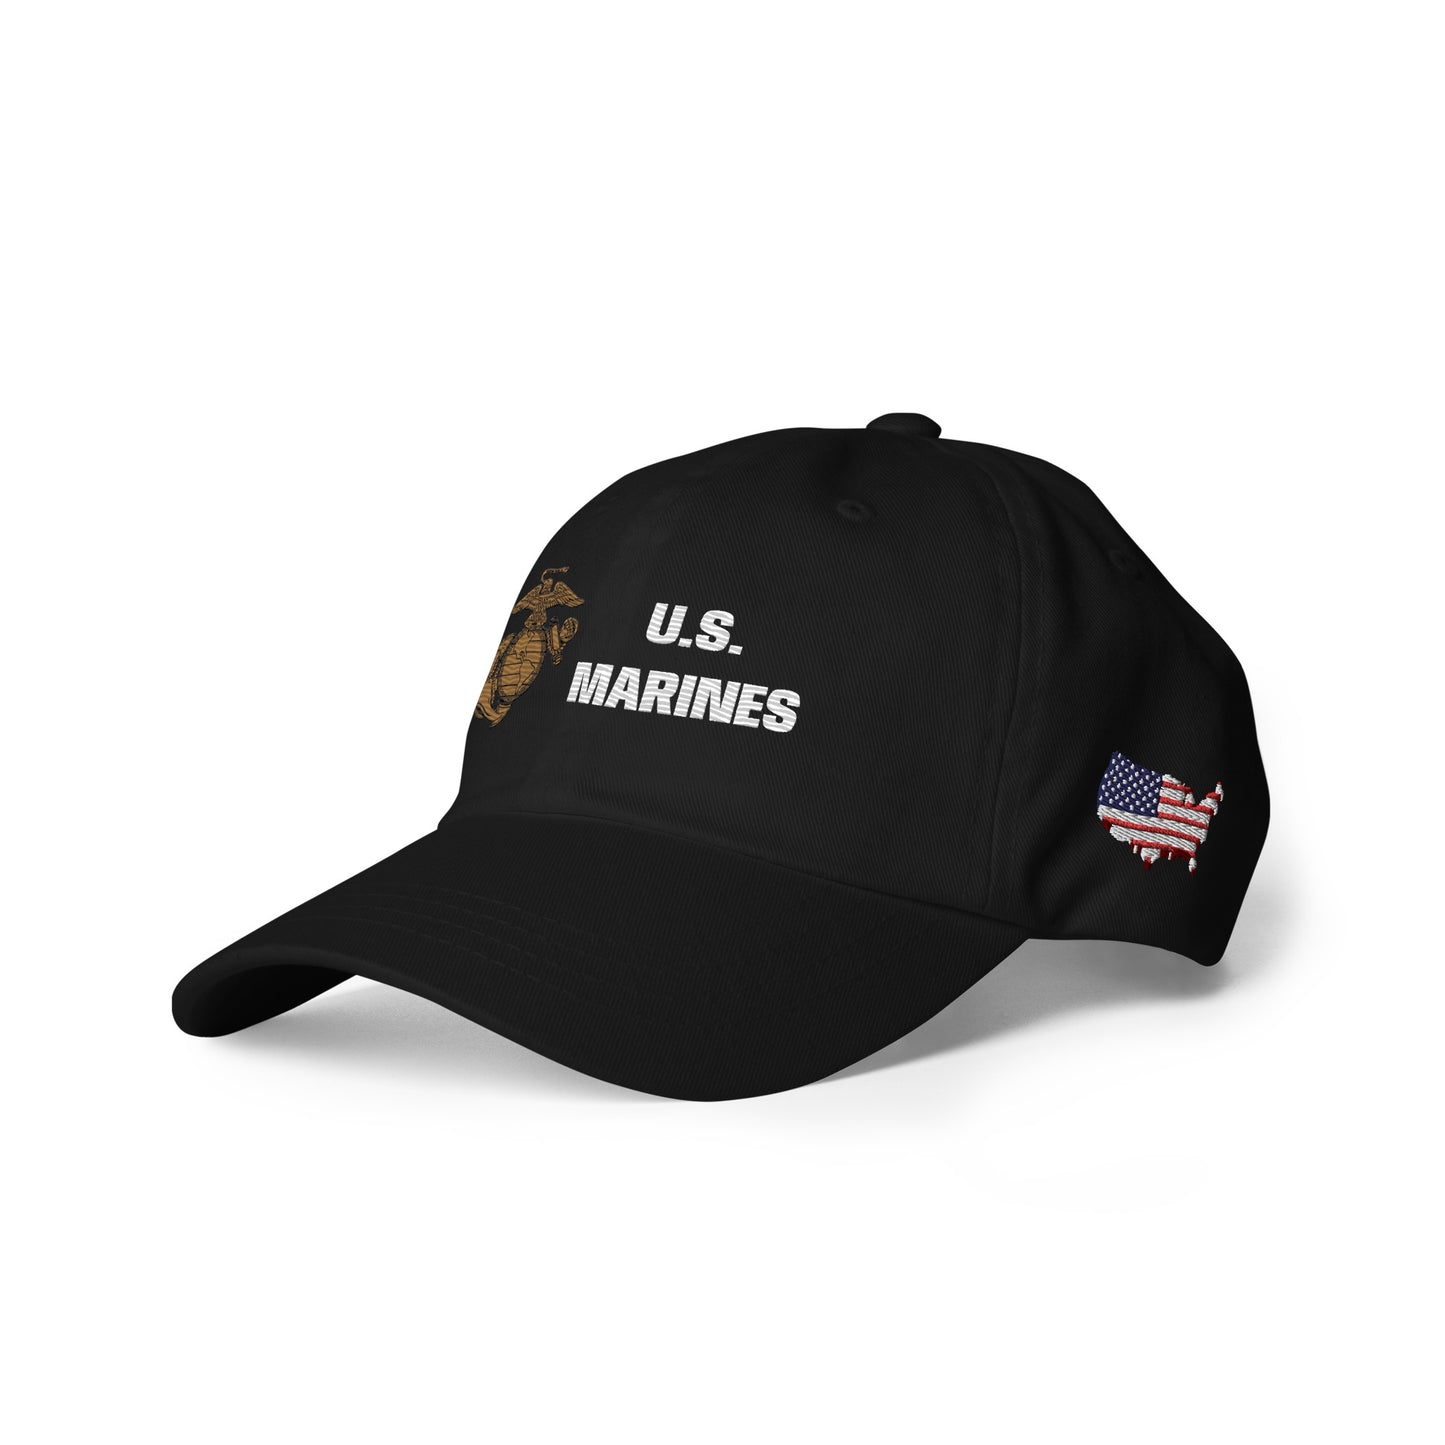 Dad hat - U.S. Marines (Gold)